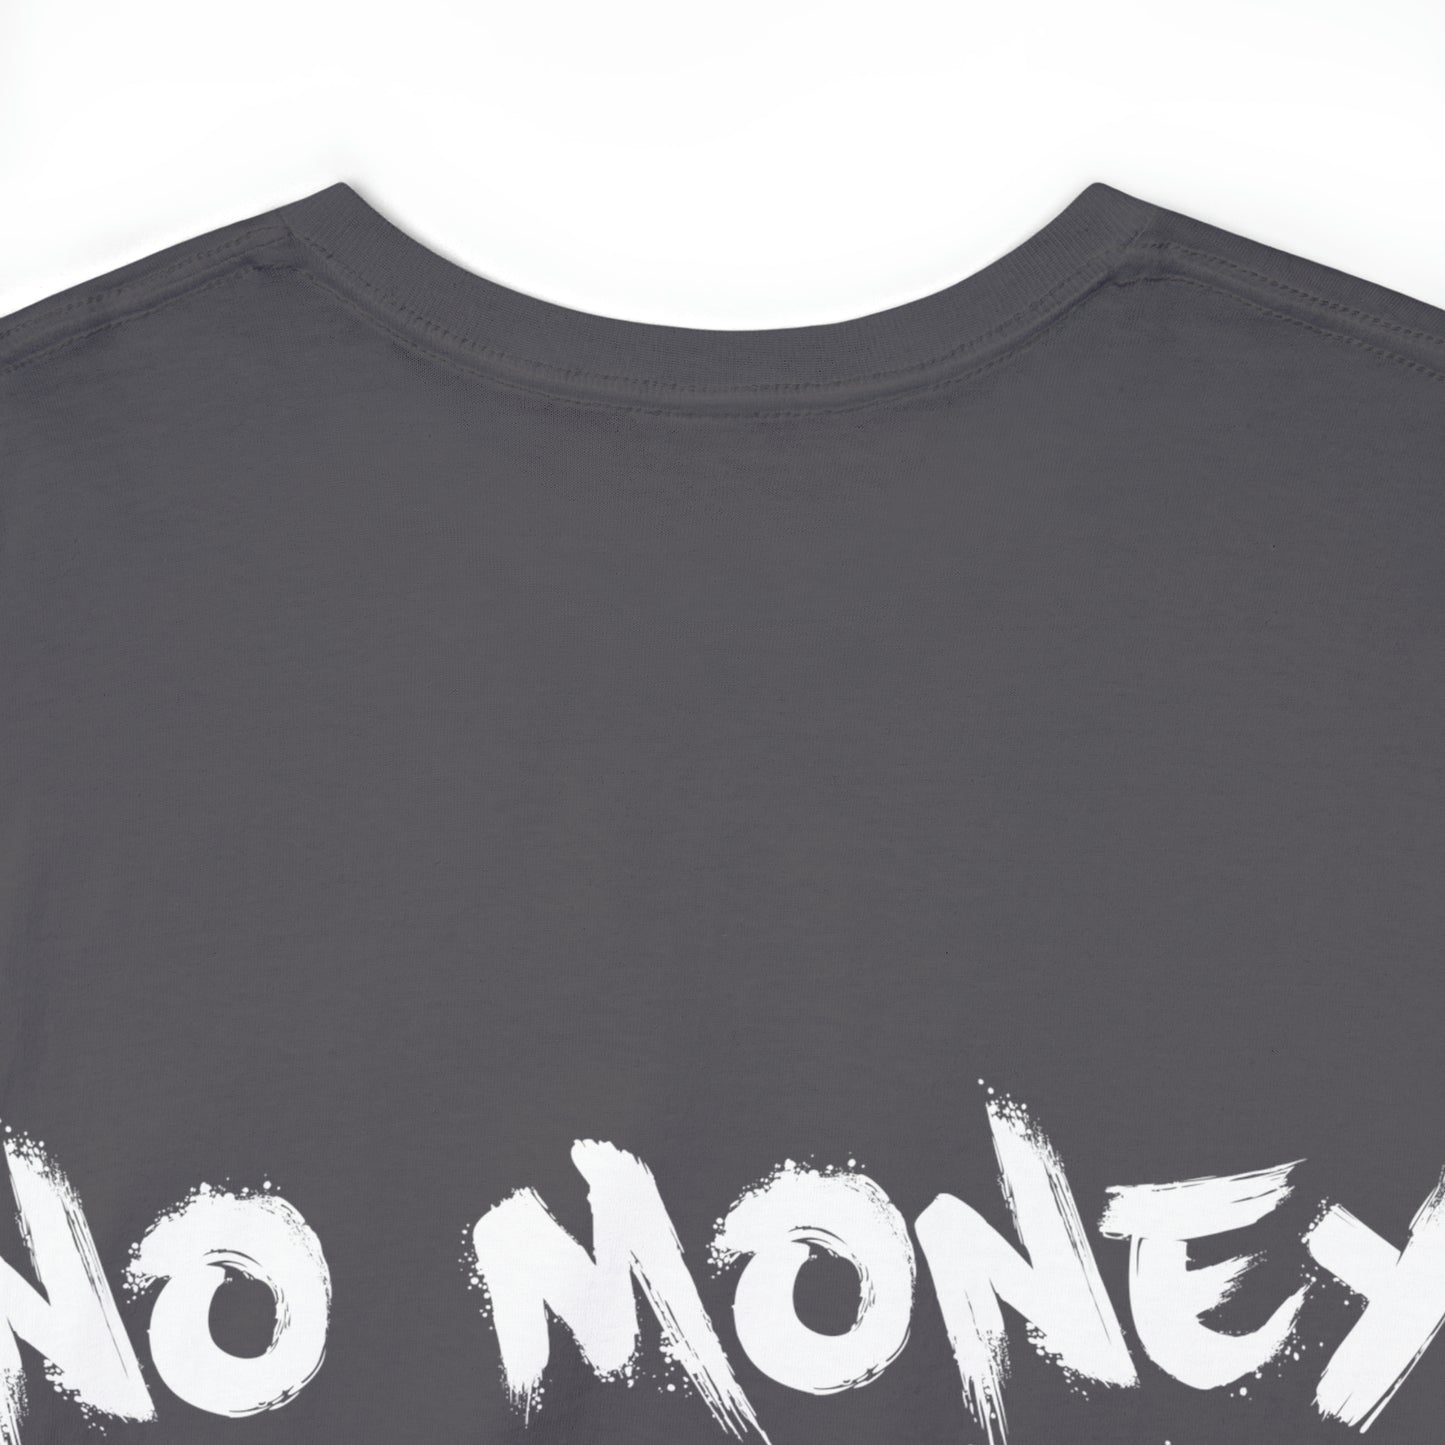 No Money No Funny | Bankz Shirt